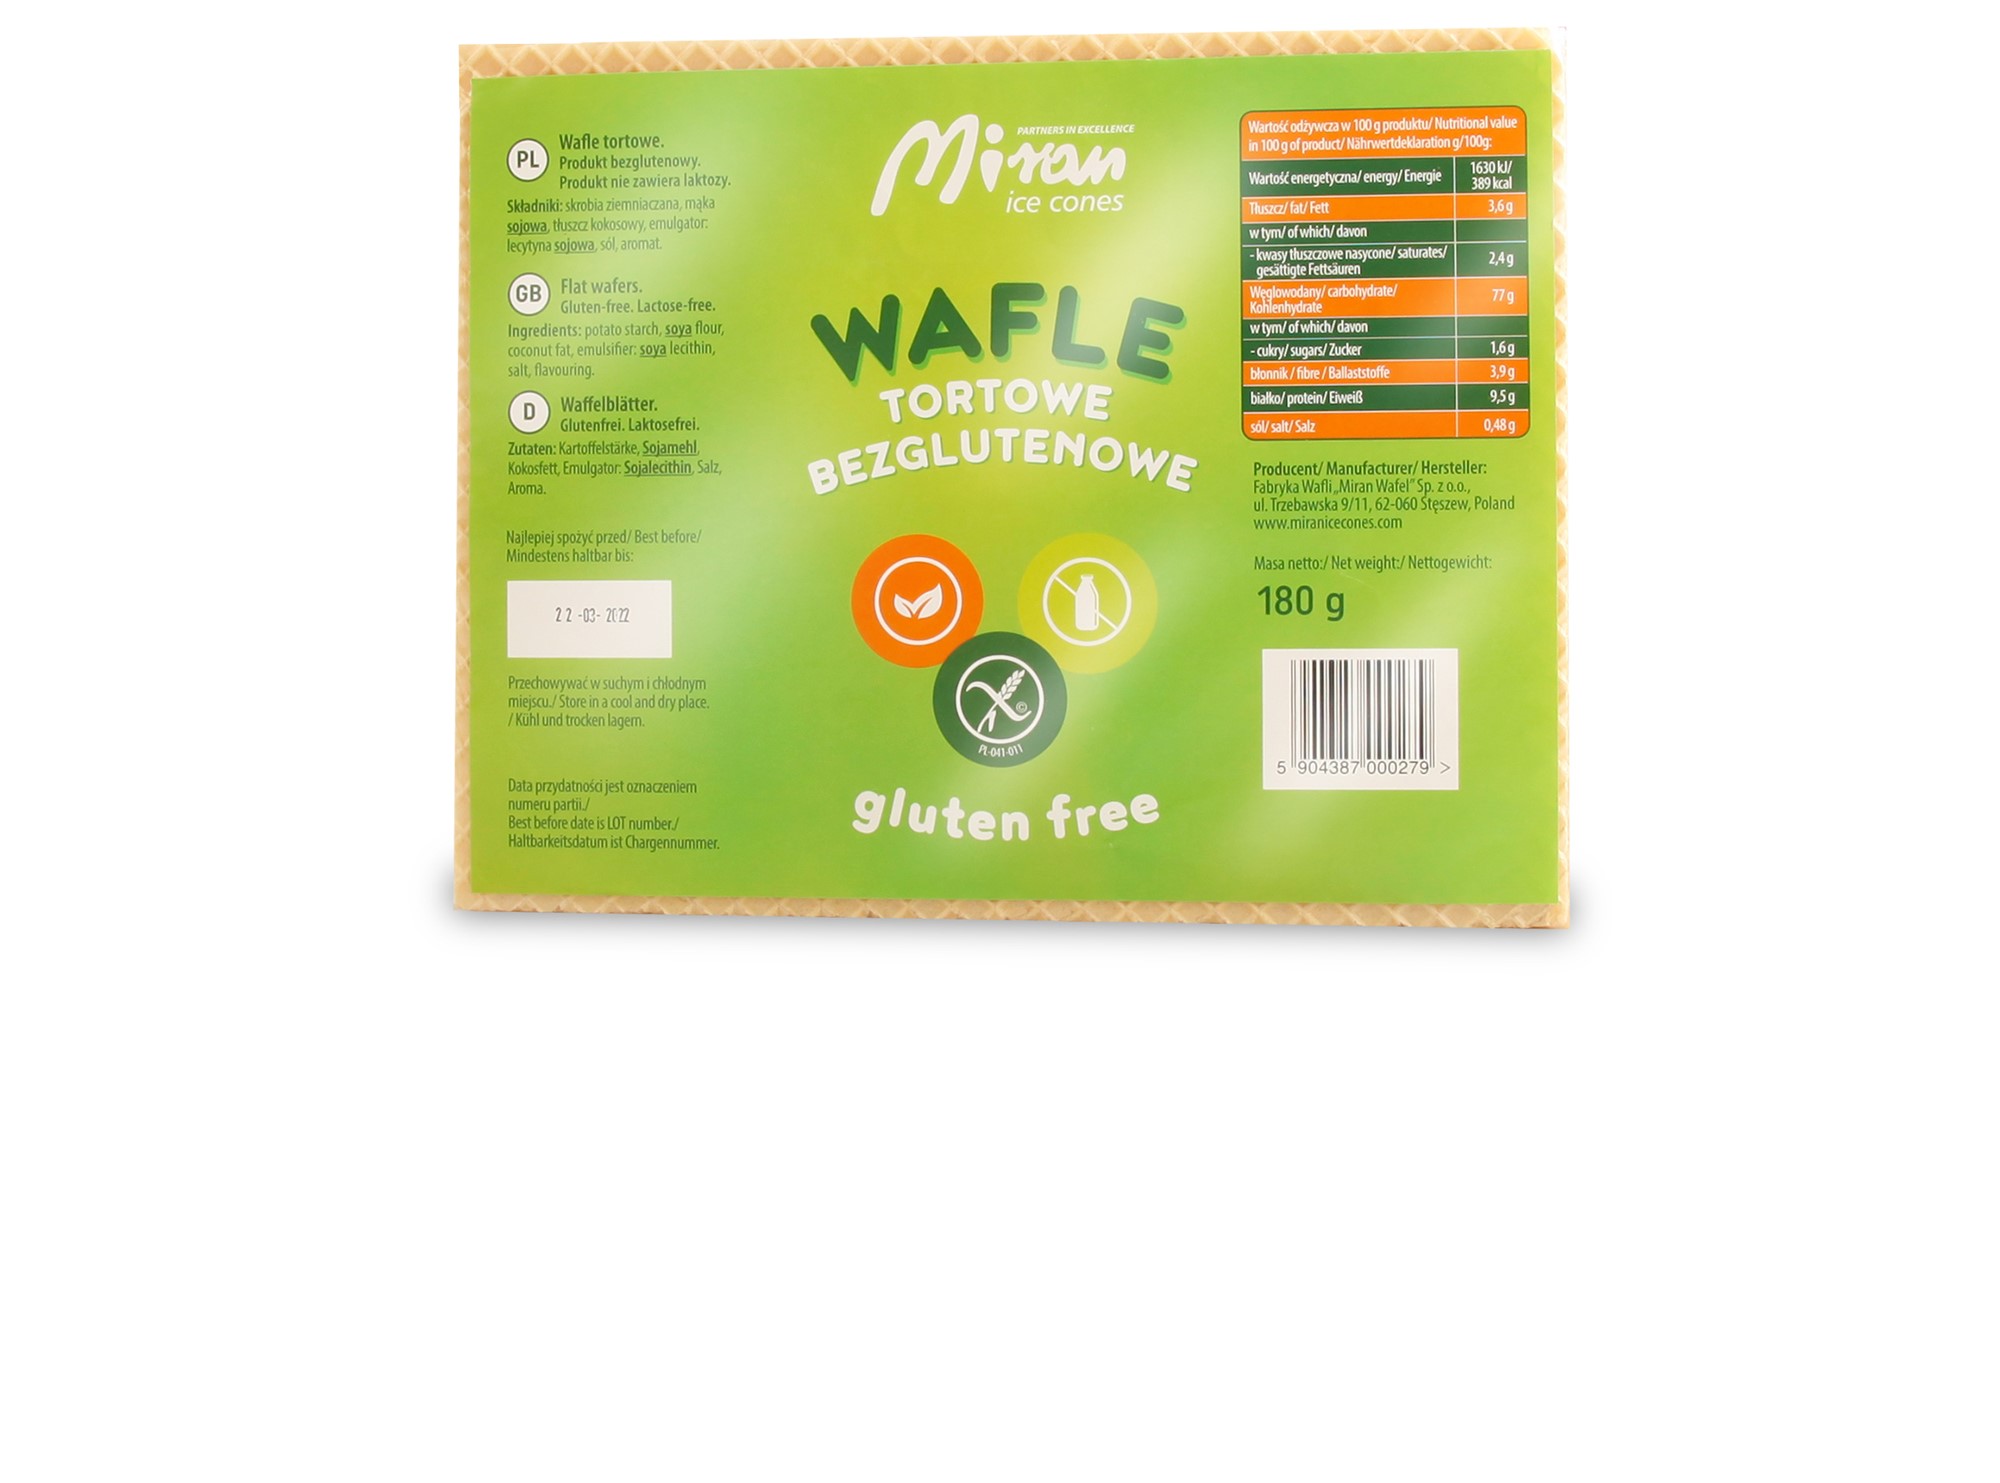 Wafle tortowe gluten-free